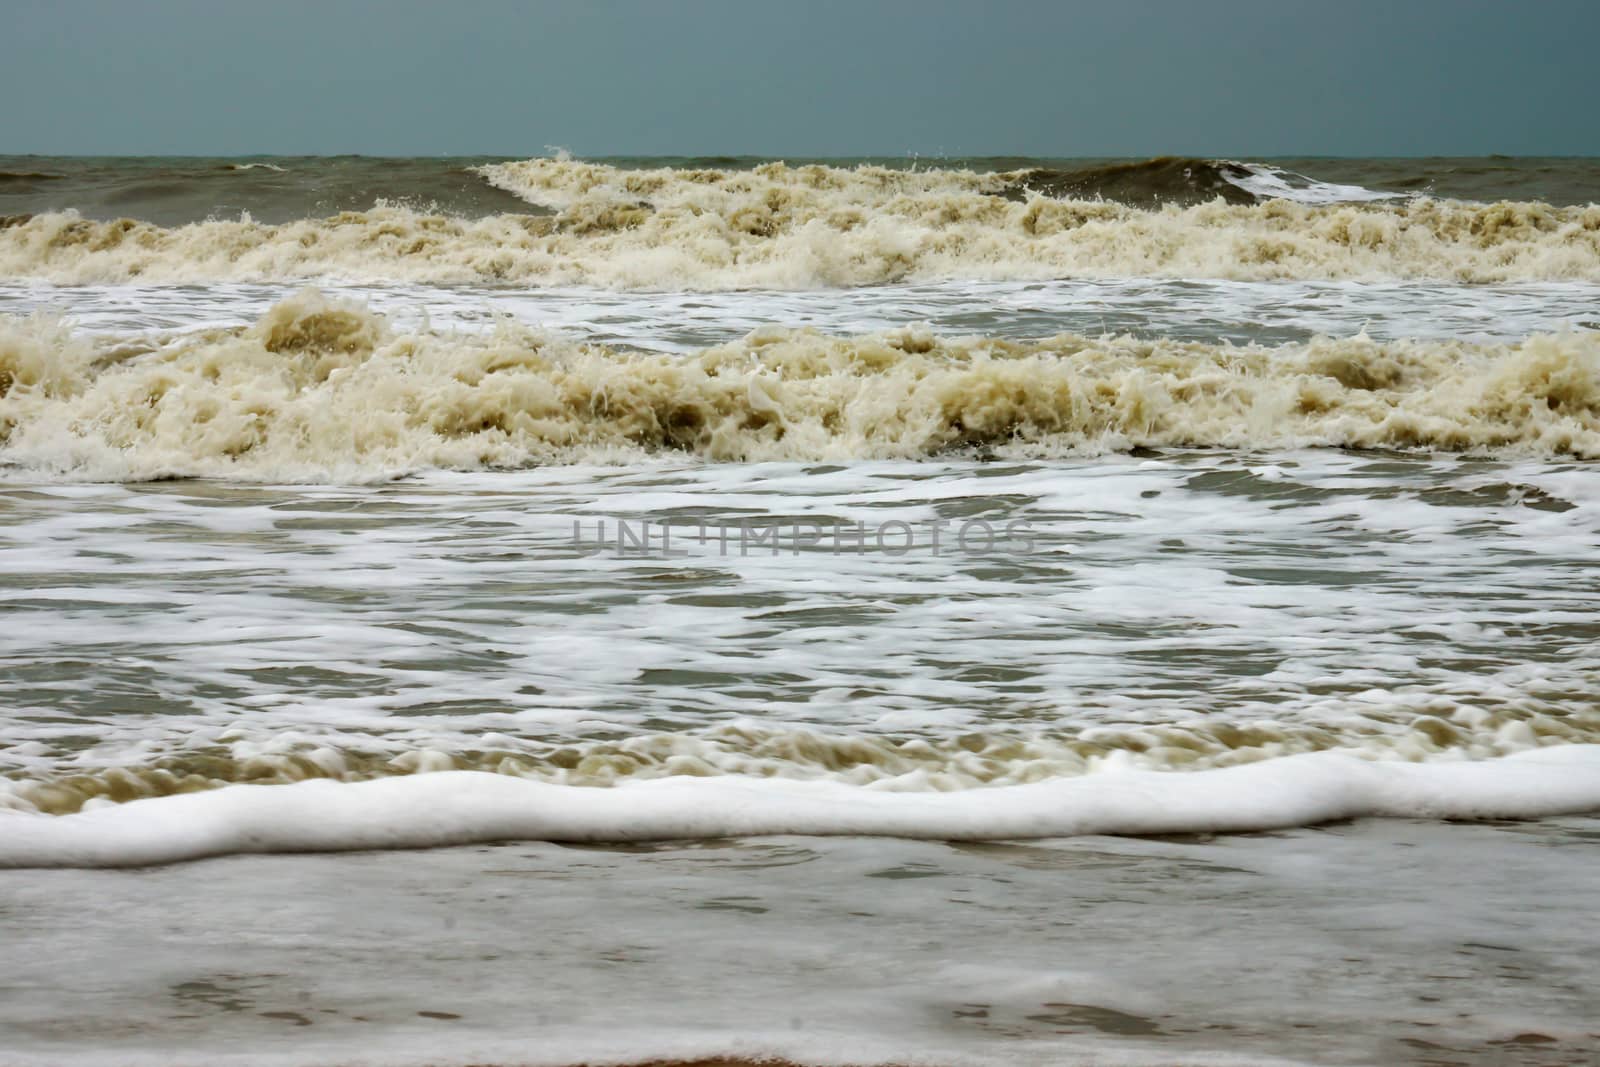 Sea waves, intensity in monsoon season.